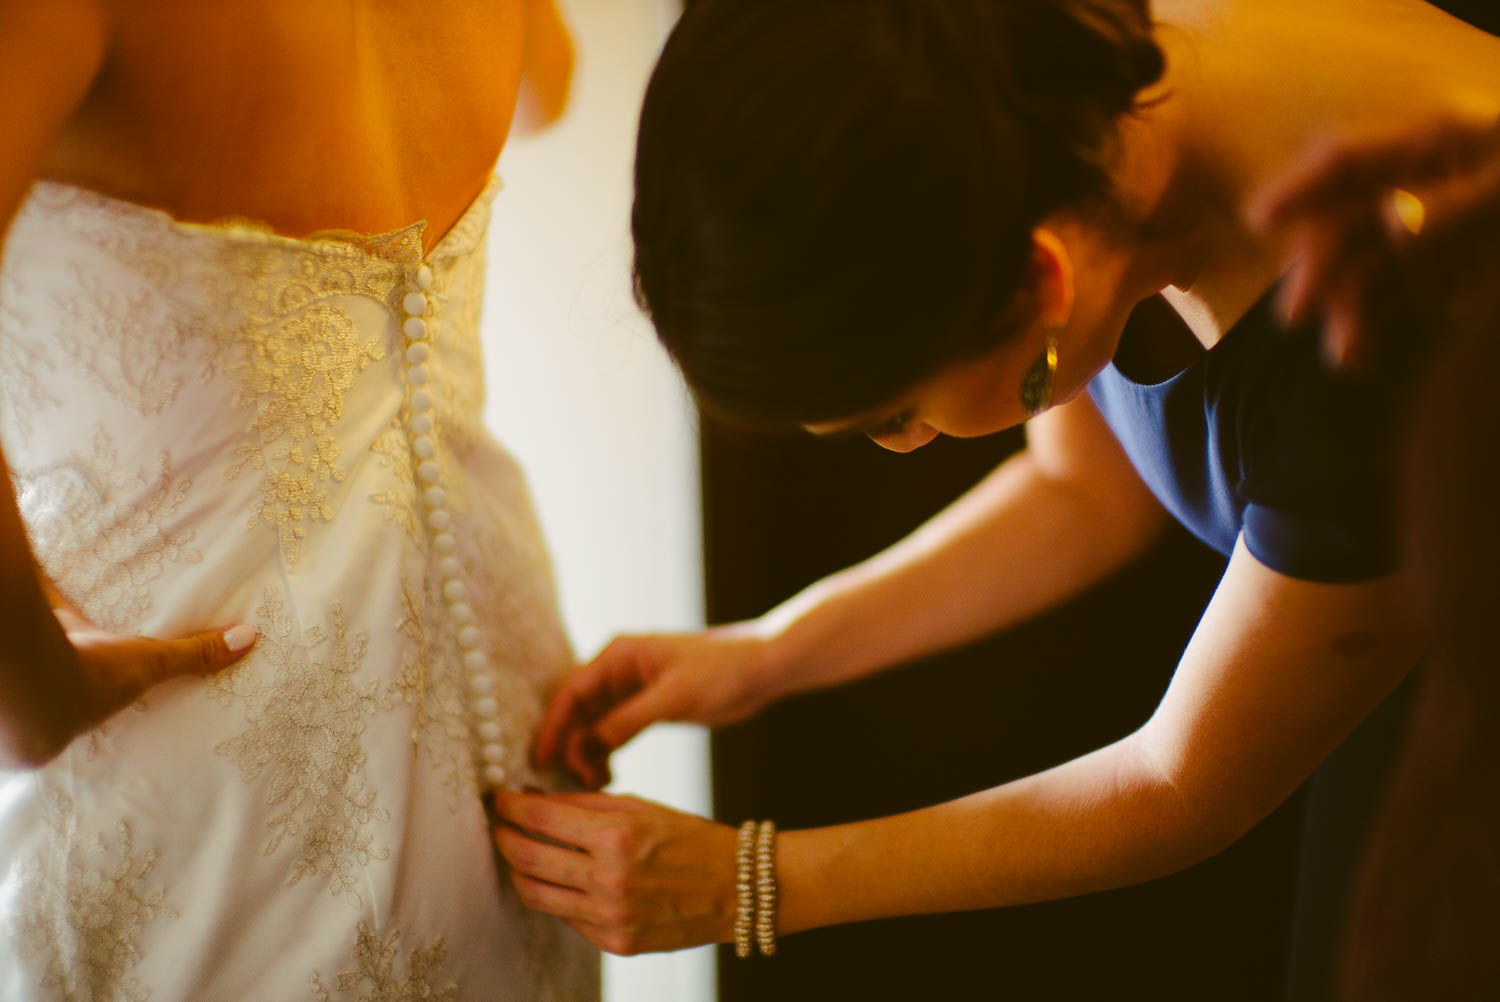 Buttoning the wedding dress at Hyatt Place San Antonio Texas